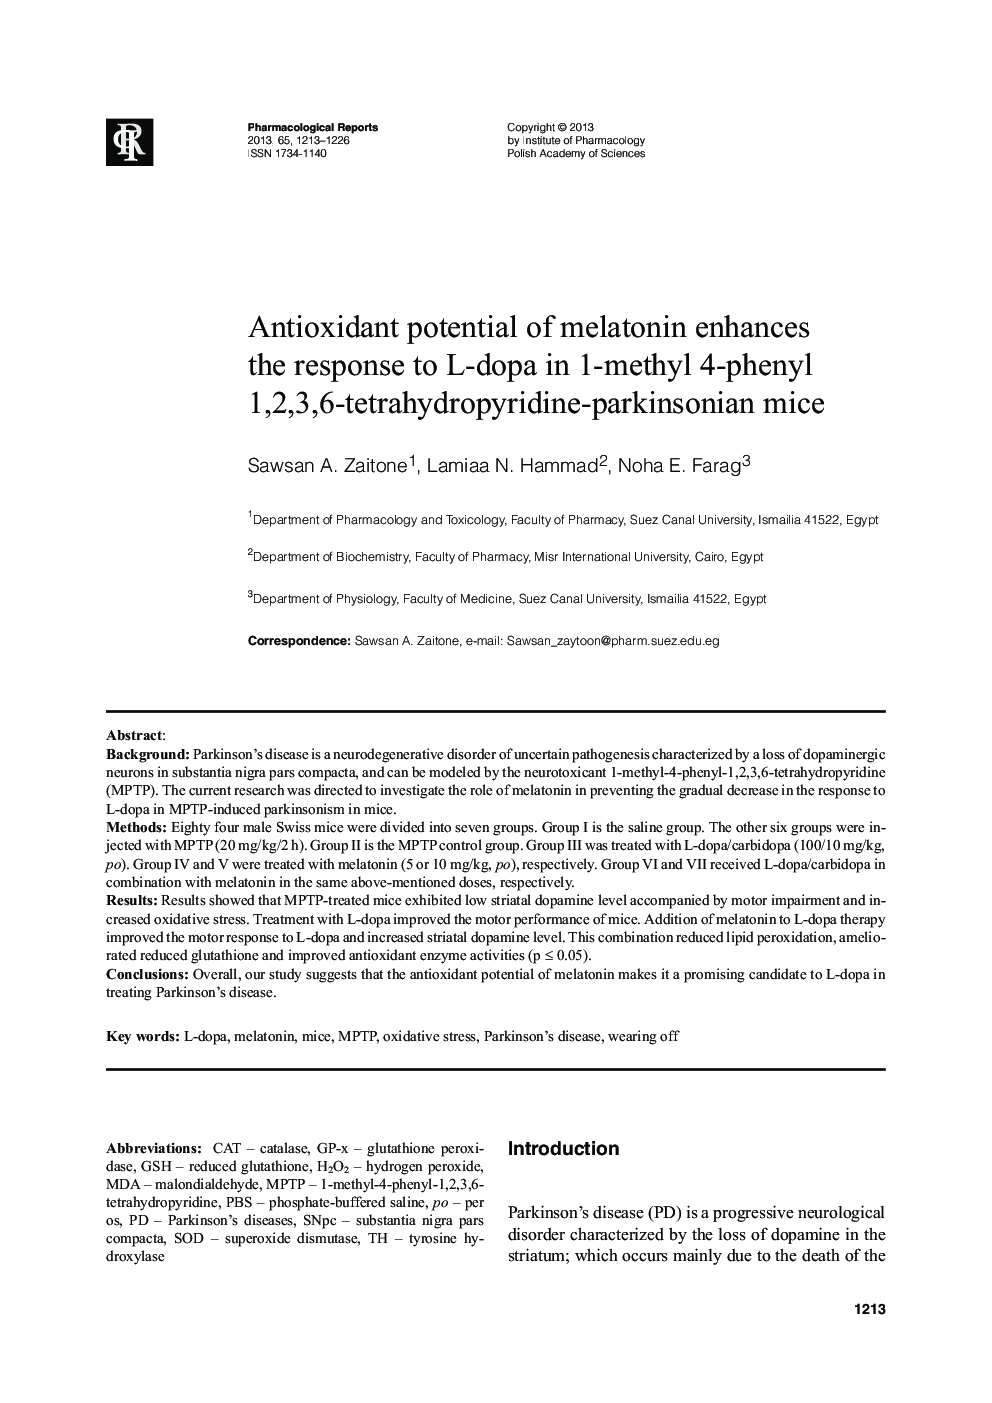 Antioxidant potential of melatonin enhances the response to L-dopa in 1-methyl 4-phenyl 1,2,3,6-tetrahydropyridine-parkinsonian mice